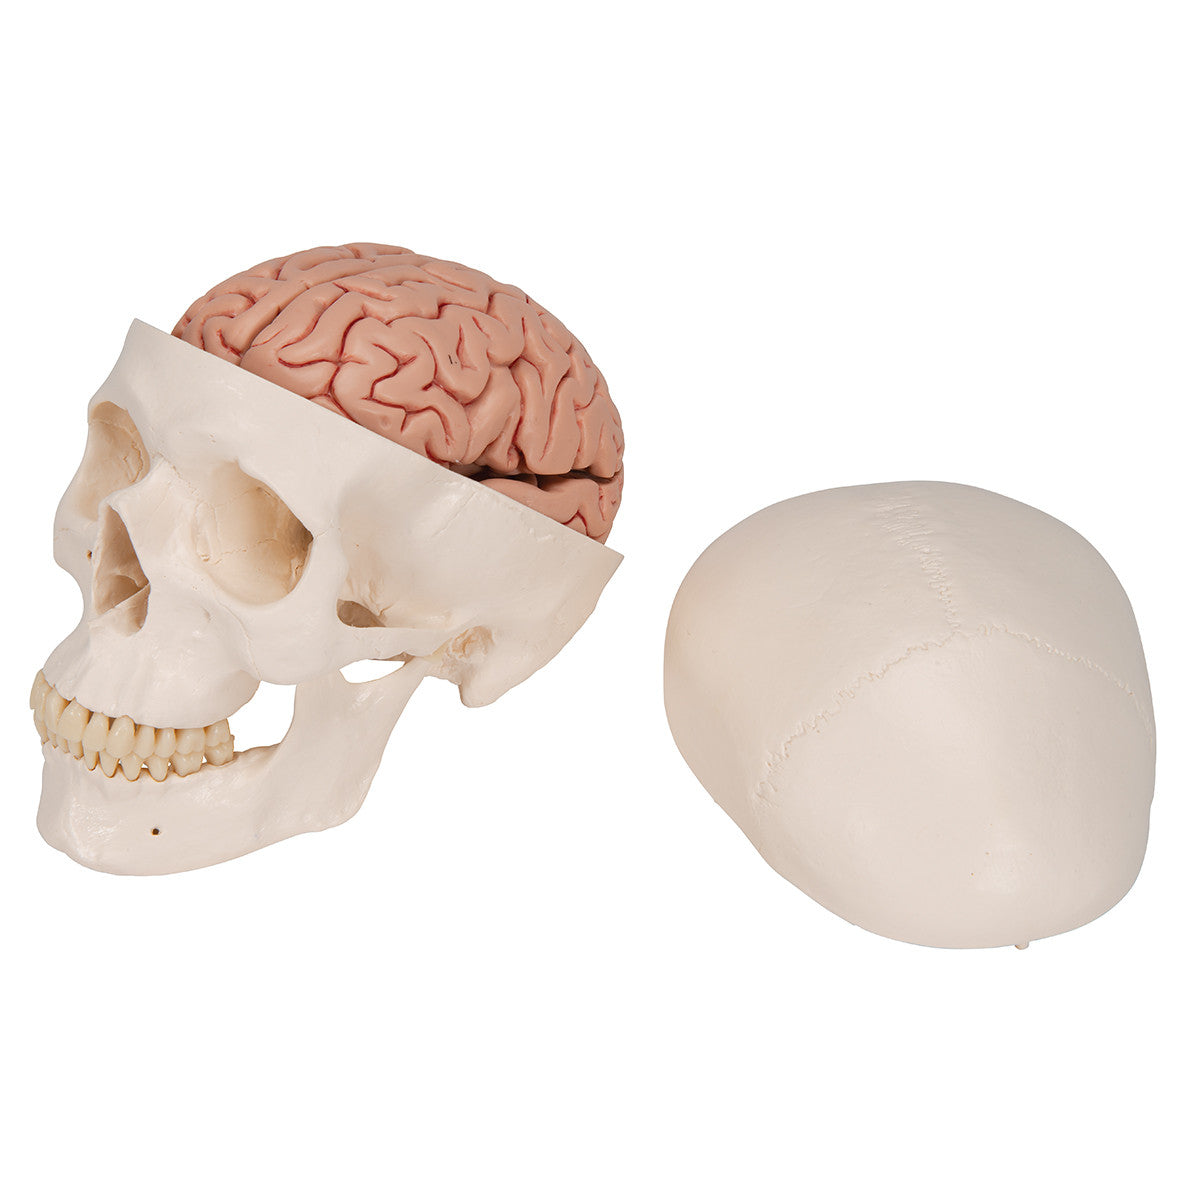 Classic Human Skull Model with 5 part Brain | 3B Scientific A20/9